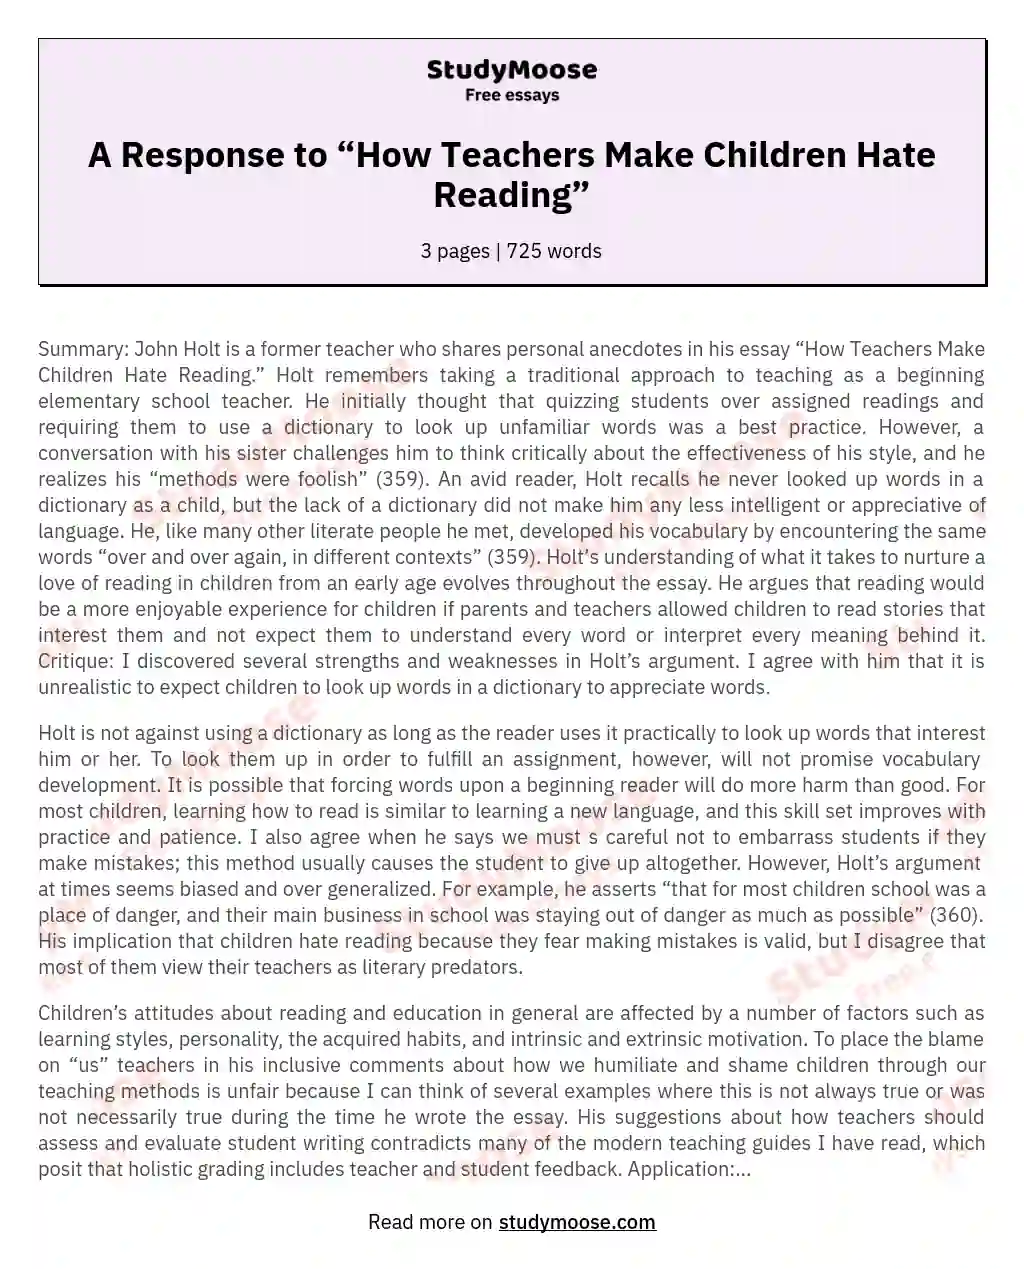 A Response to “How Teachers Make Children Hate Reading” essay